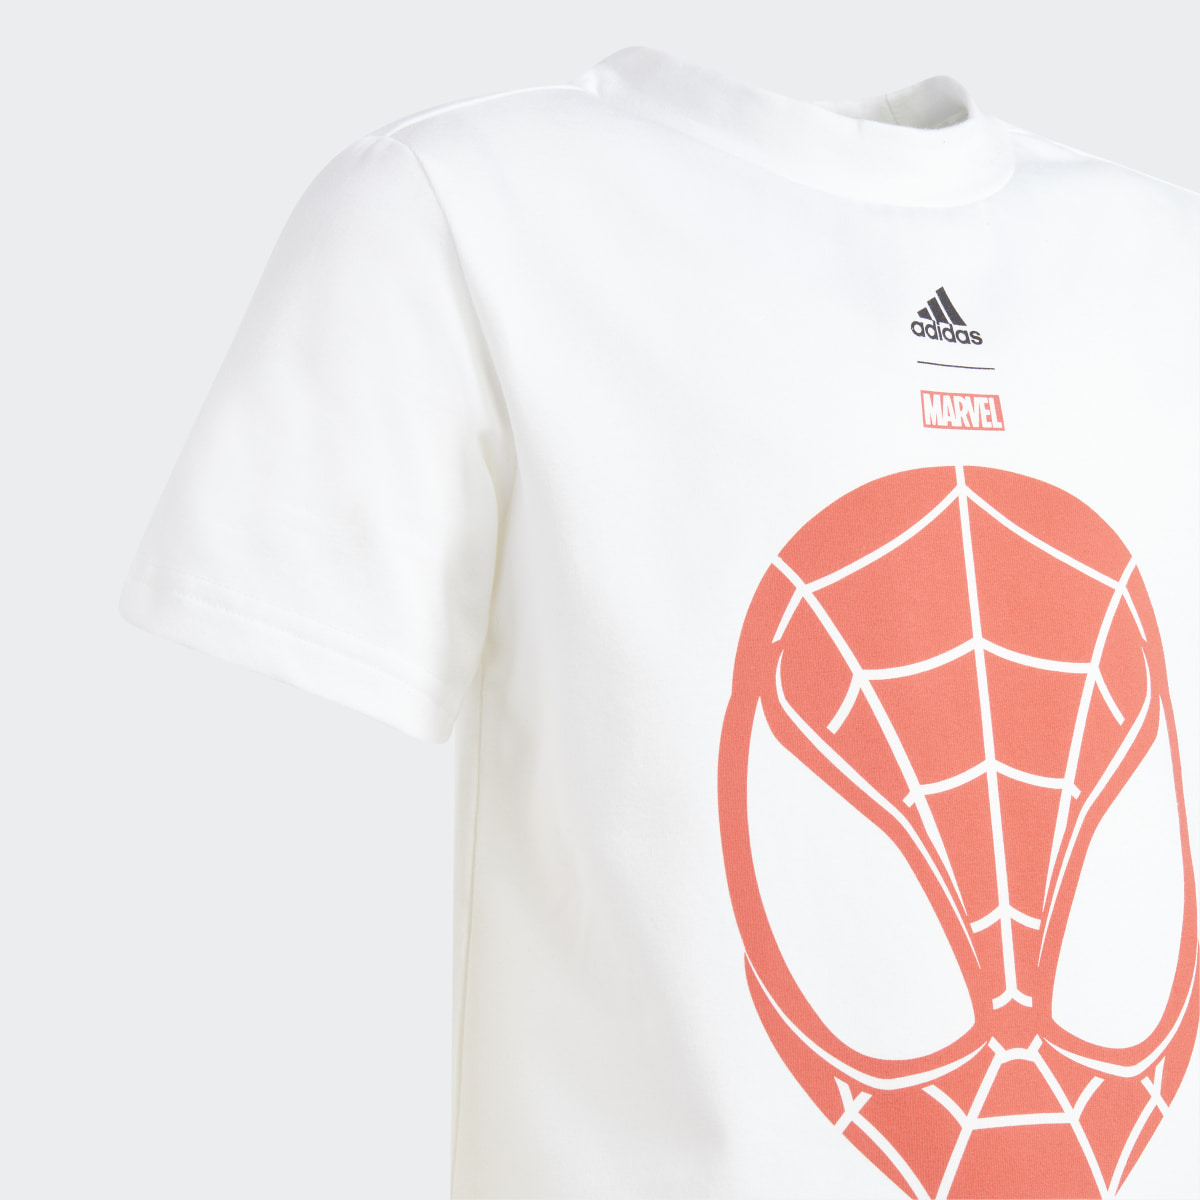 Adidas x Marvel Spider-Man Tee and Shorts Set. 6